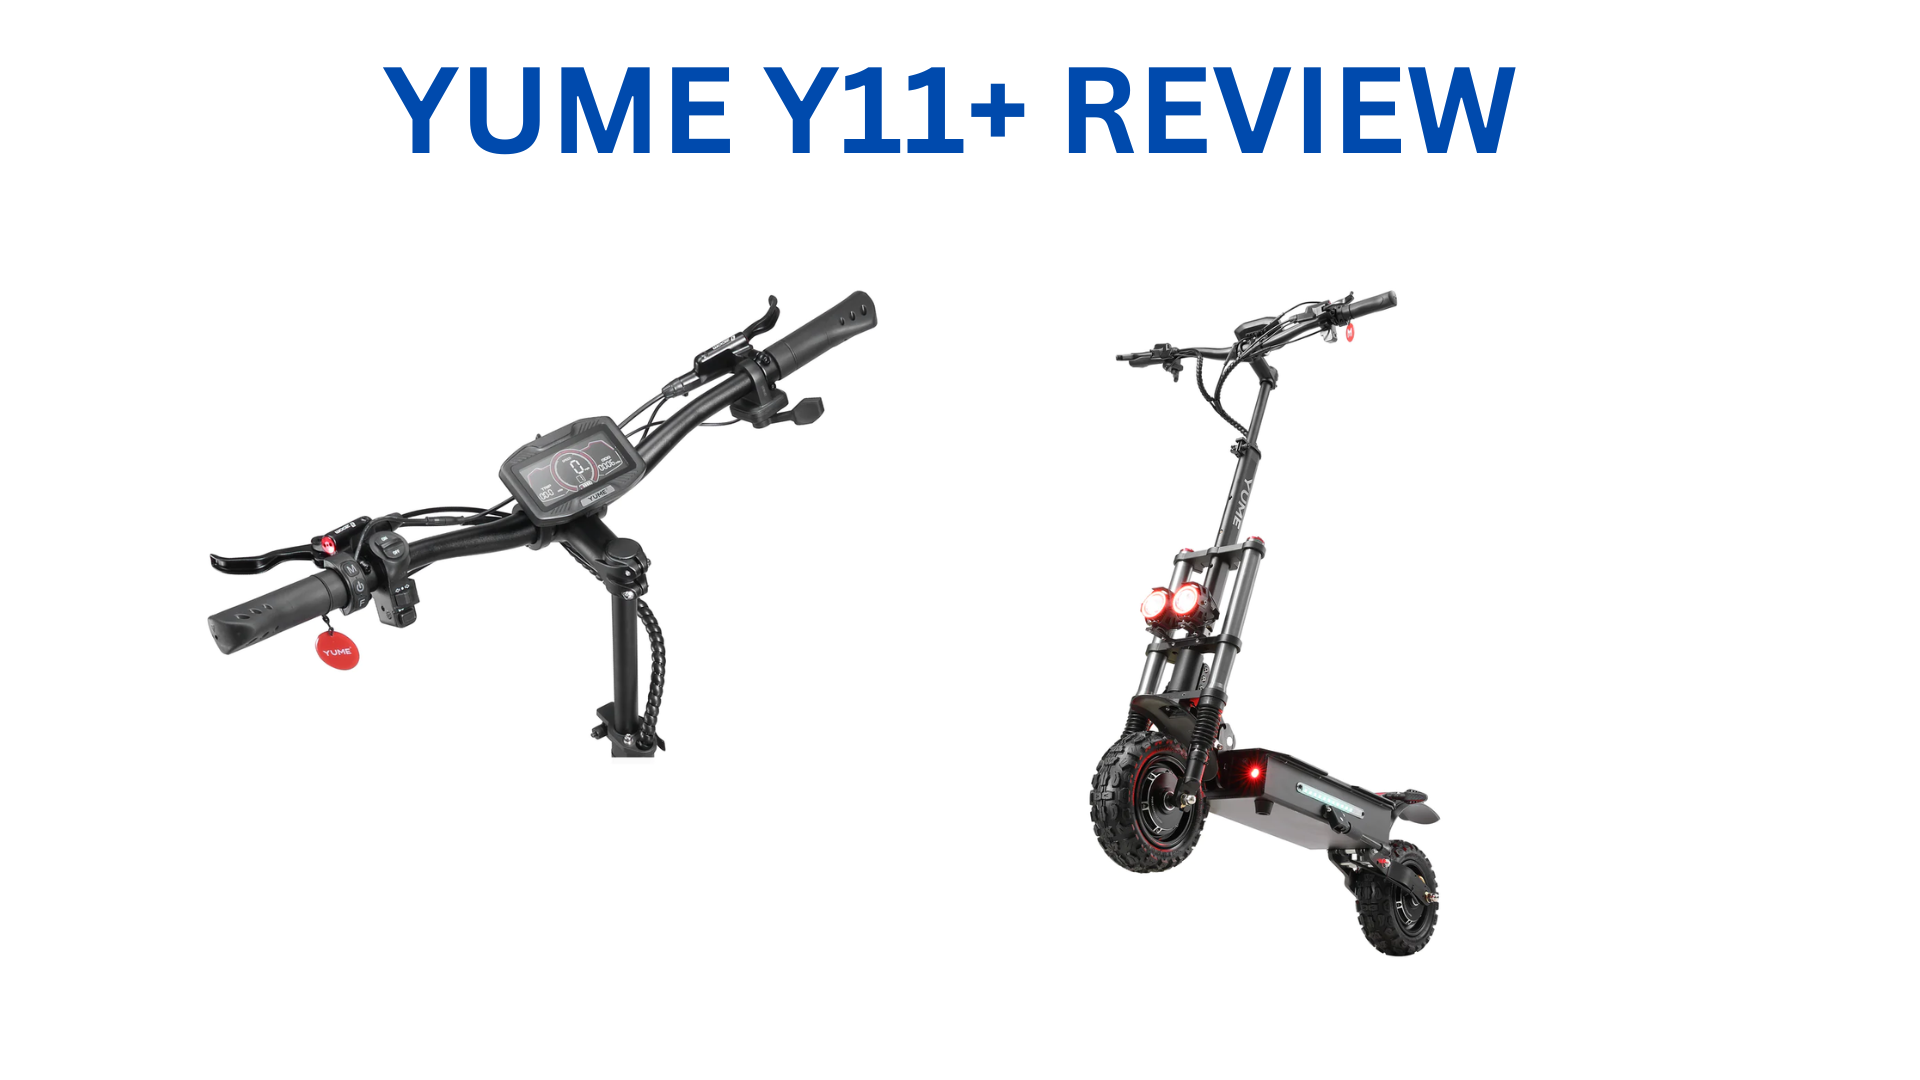 YUME Y11+ Review